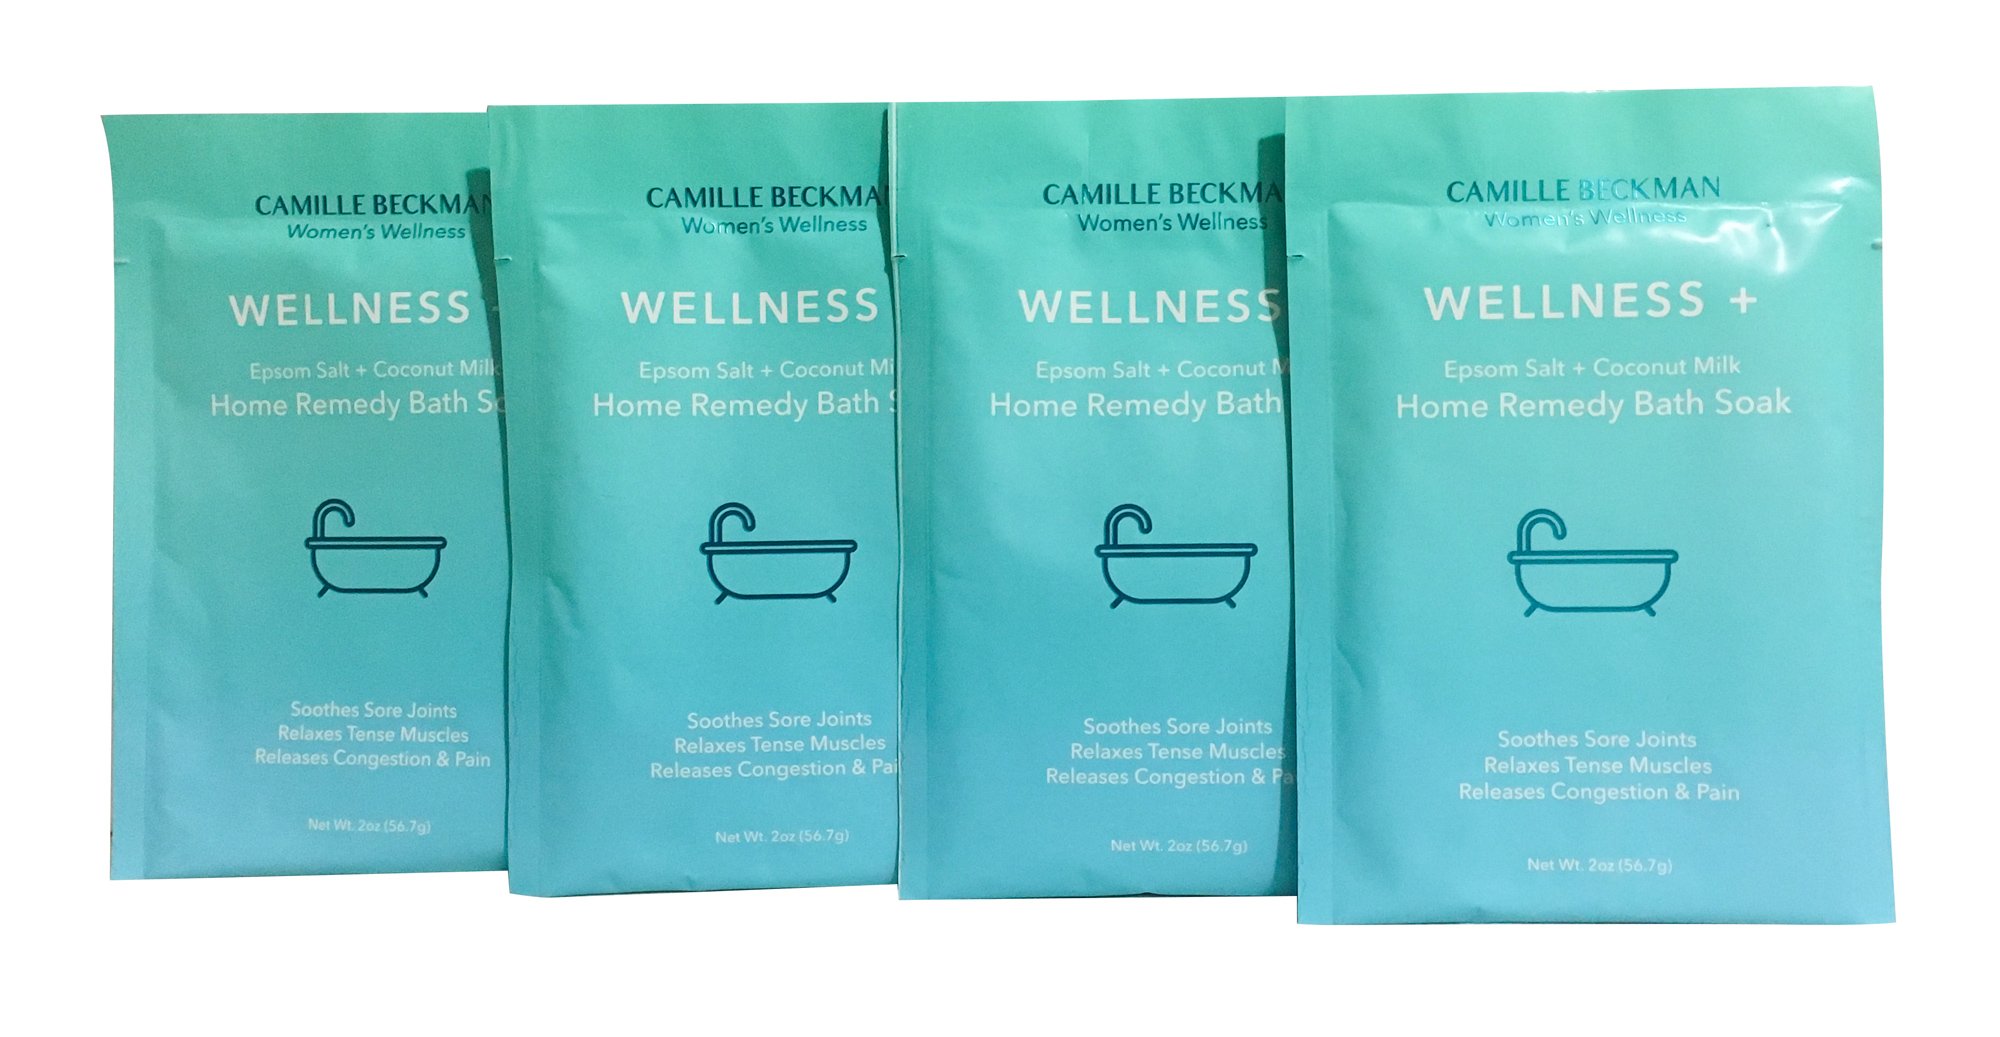 Camille Beckman Home Remedy Body Bath Soak, Wellness Plus, 2 Oz (Pack of 4)